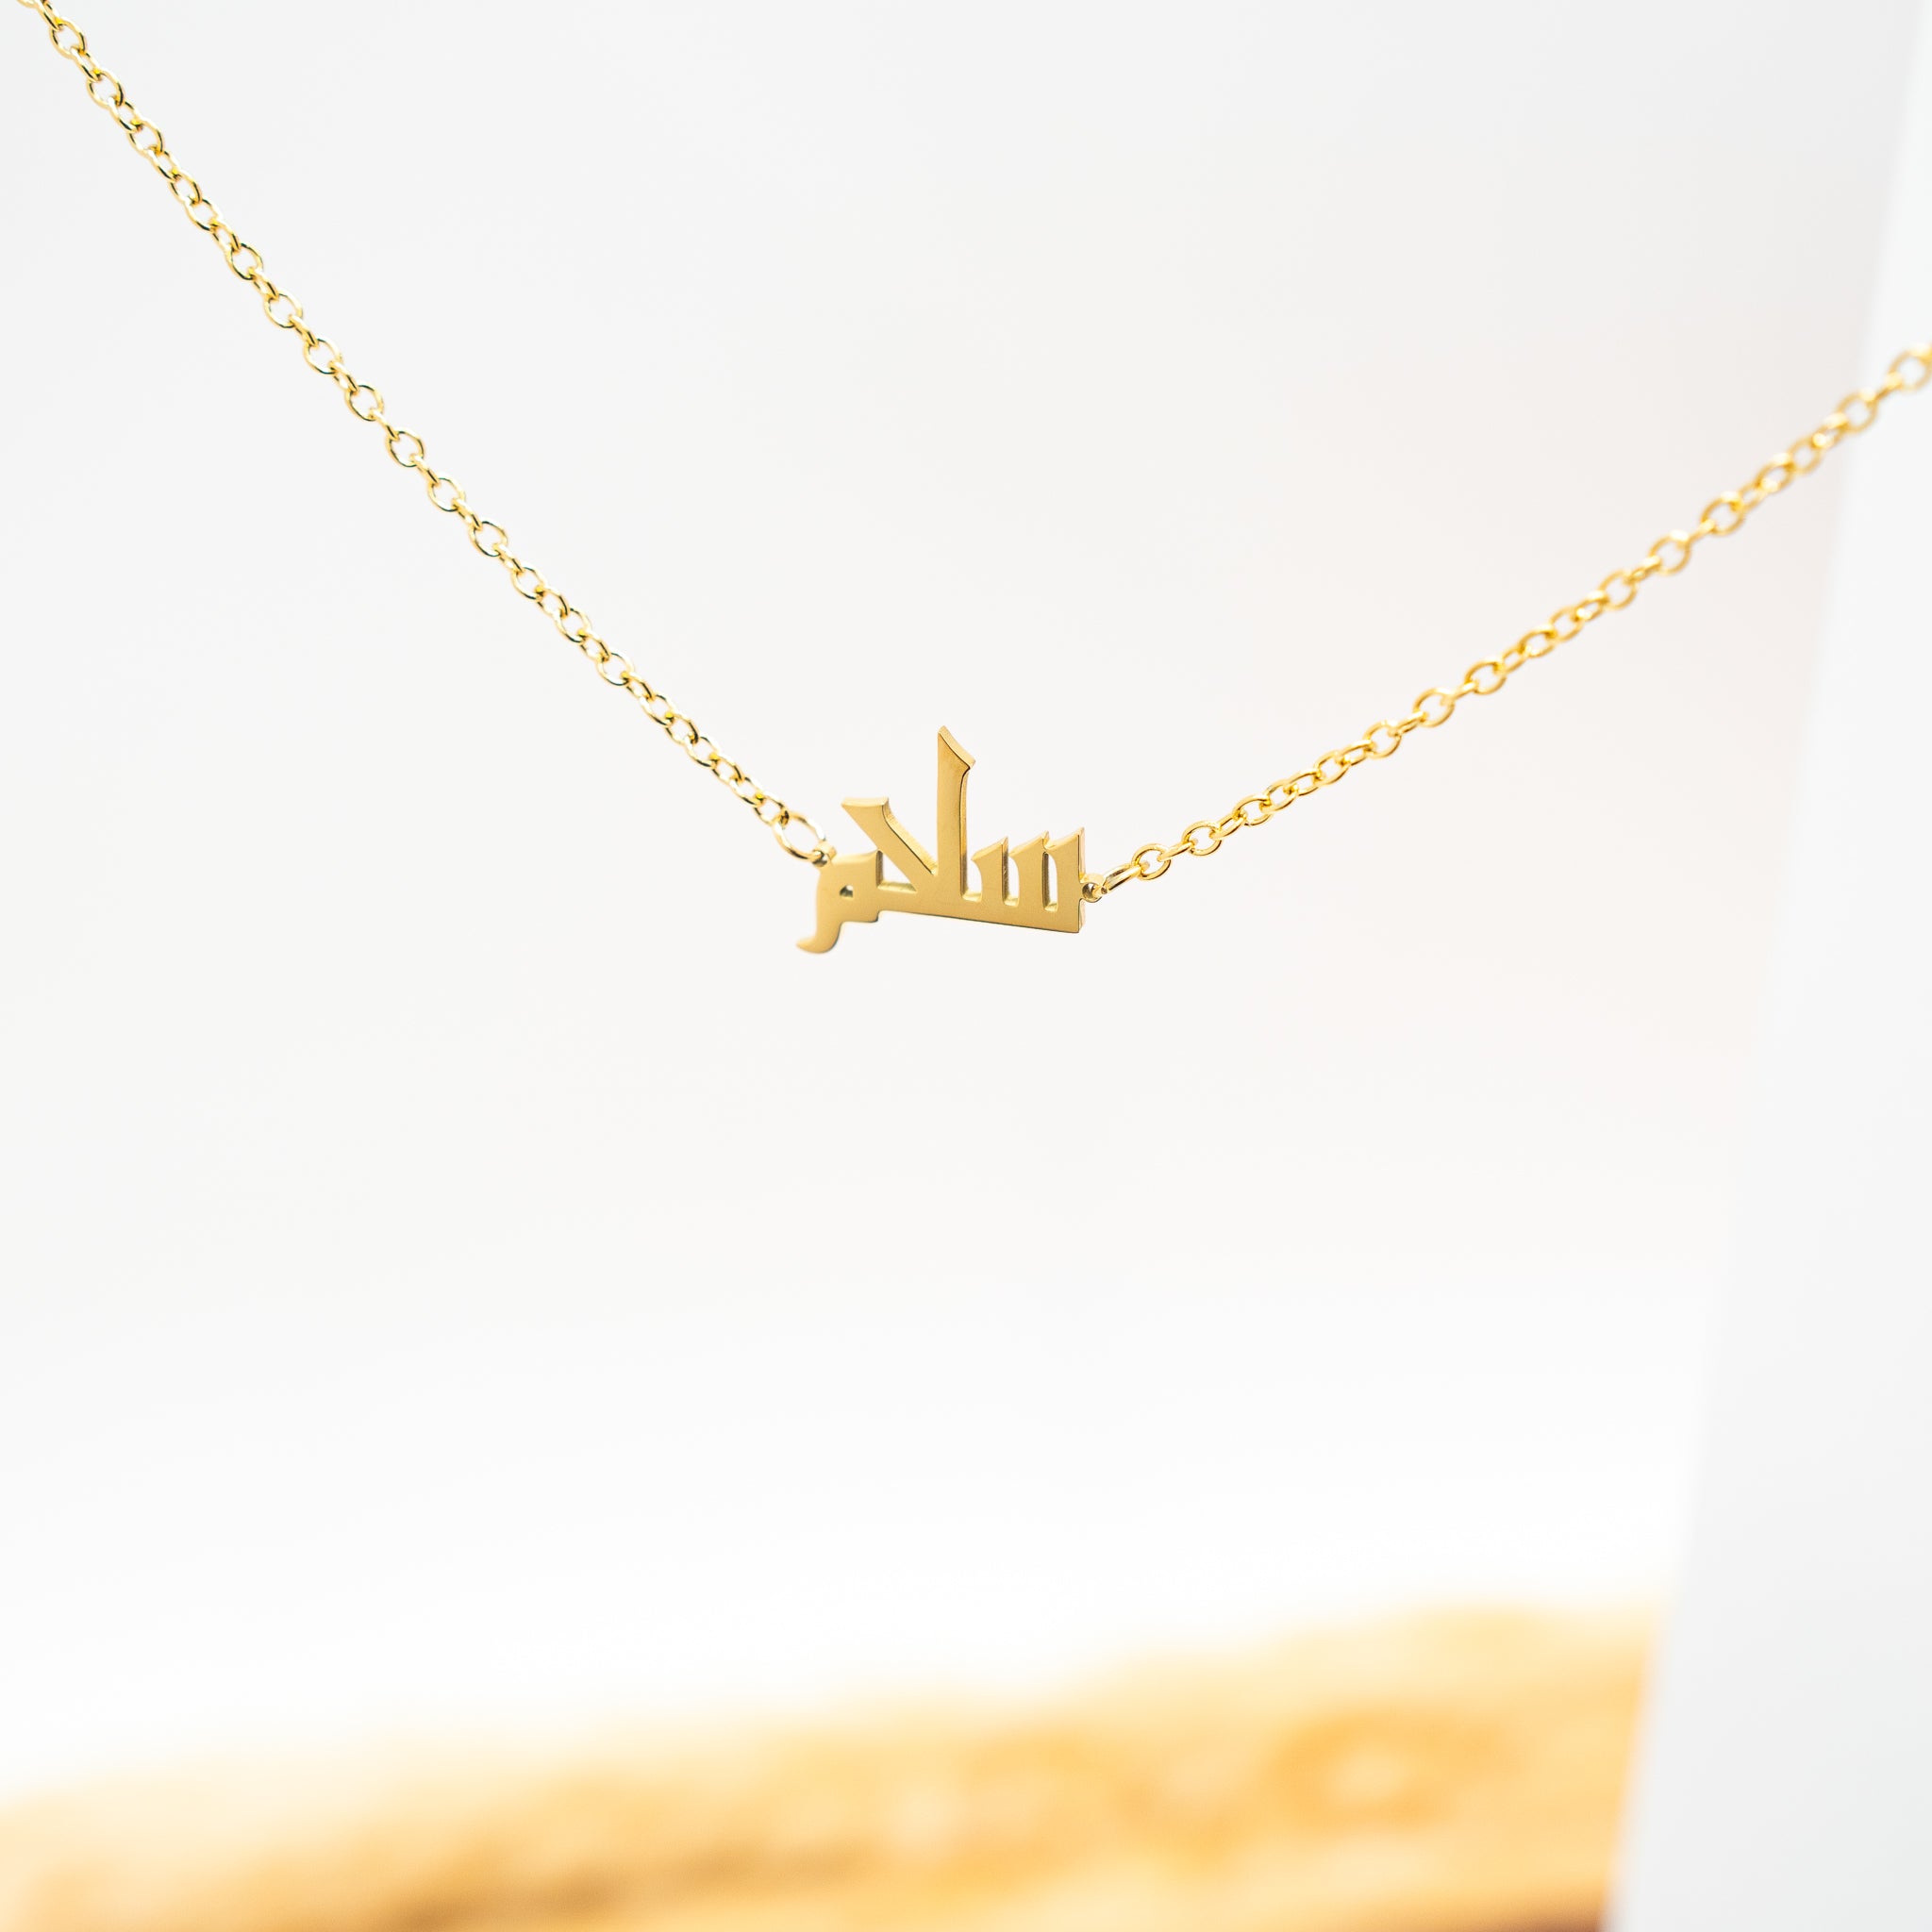 Salaams Necklace 2.0 |Arabic: سلام | "Peace"